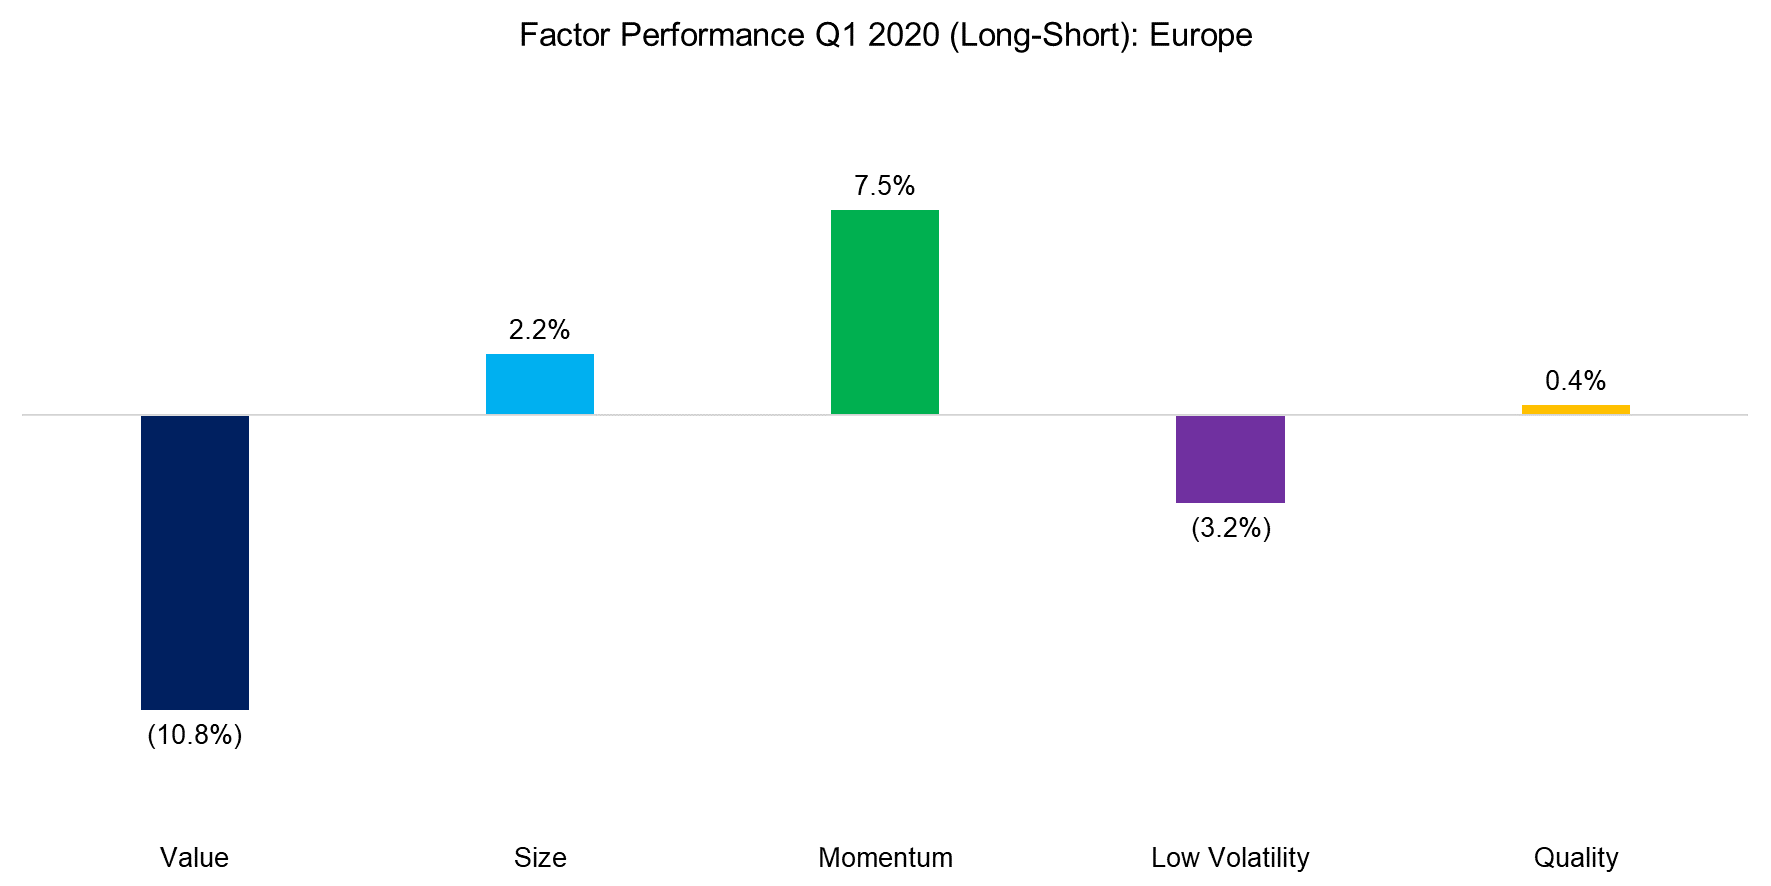 Factor Performance Q1 2020 (Long-Short) Europe